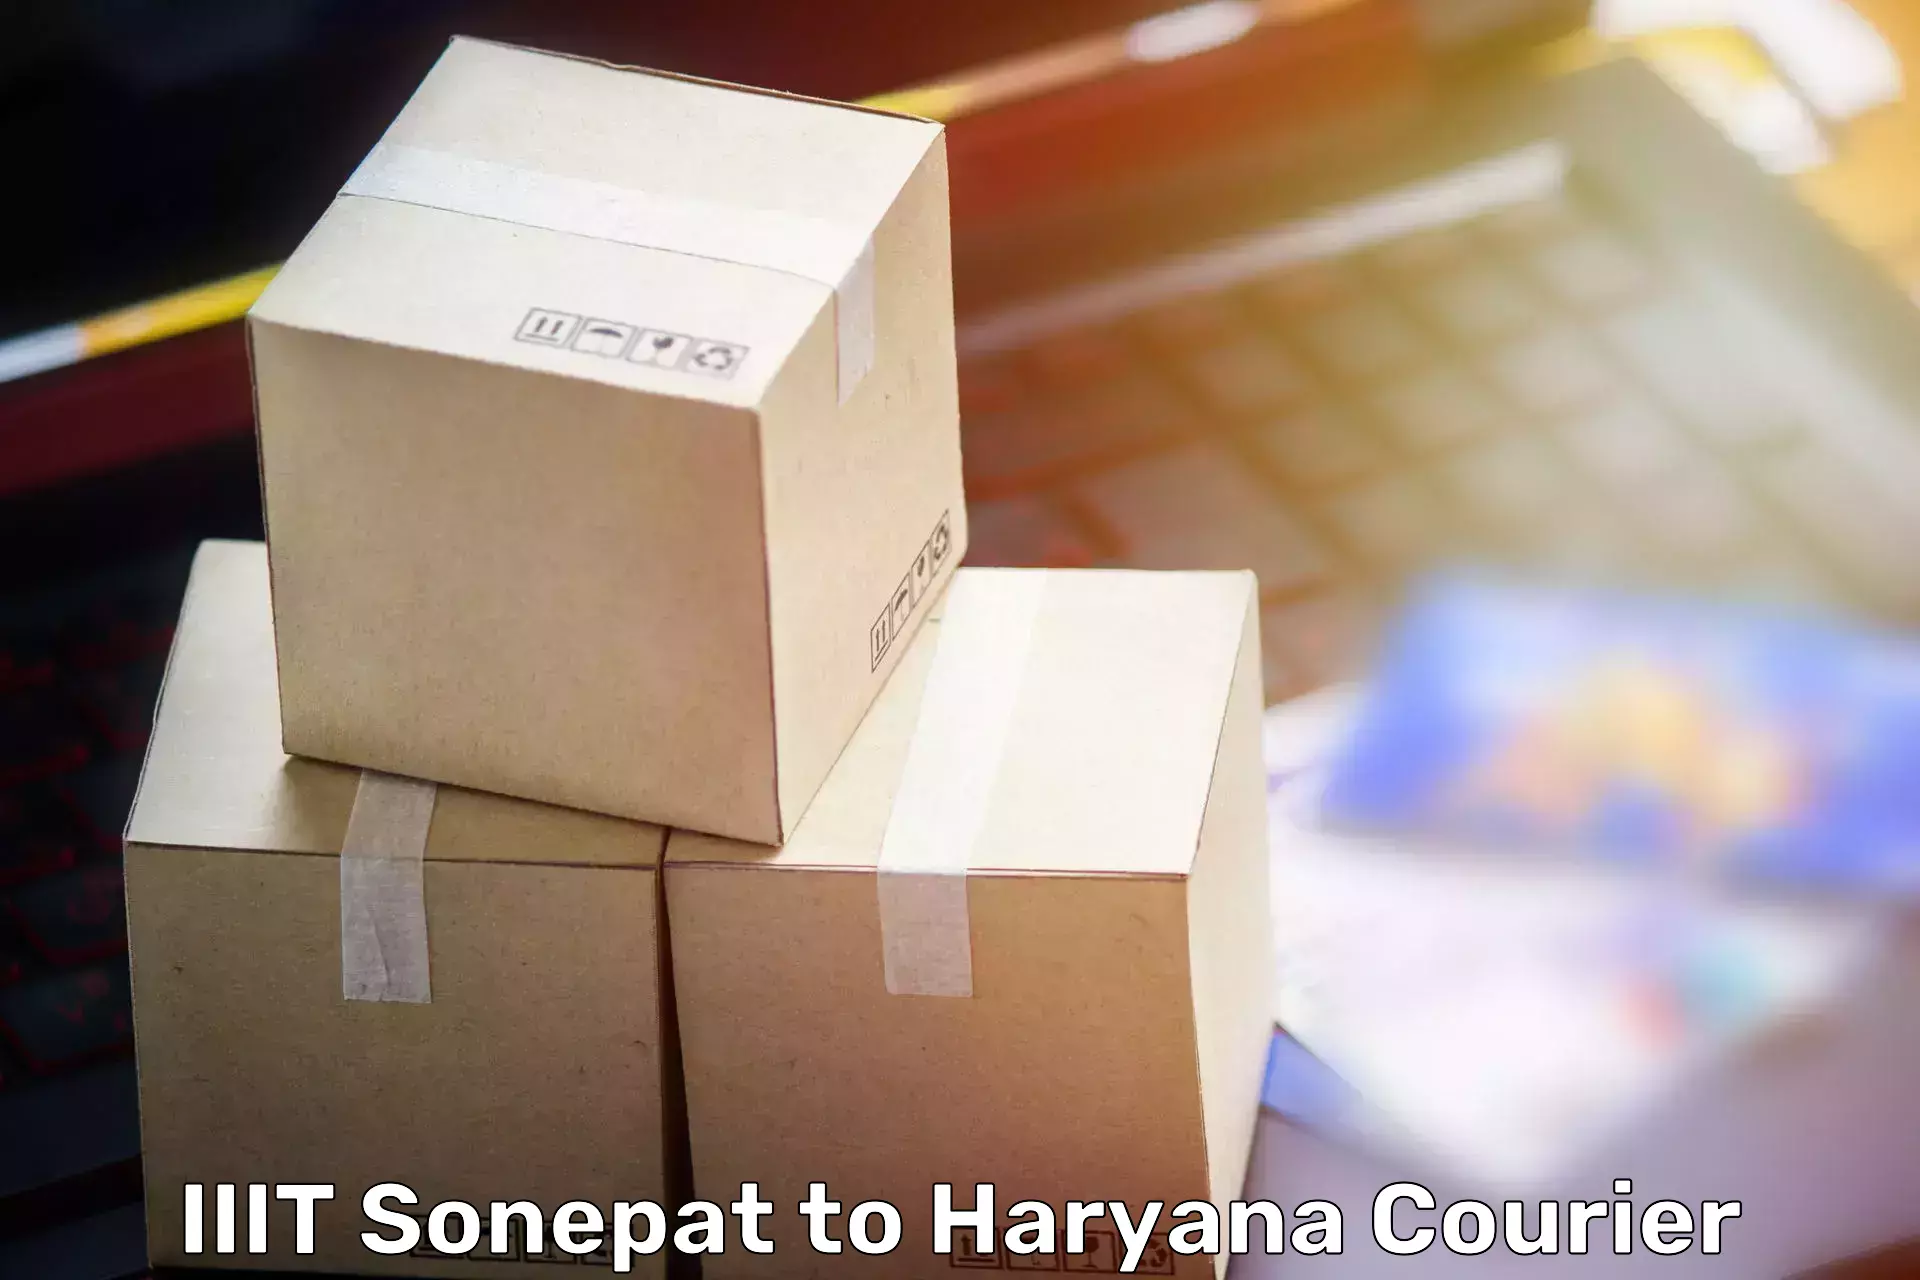 Expert moving and storage IIIT Sonepat to Gurgaon